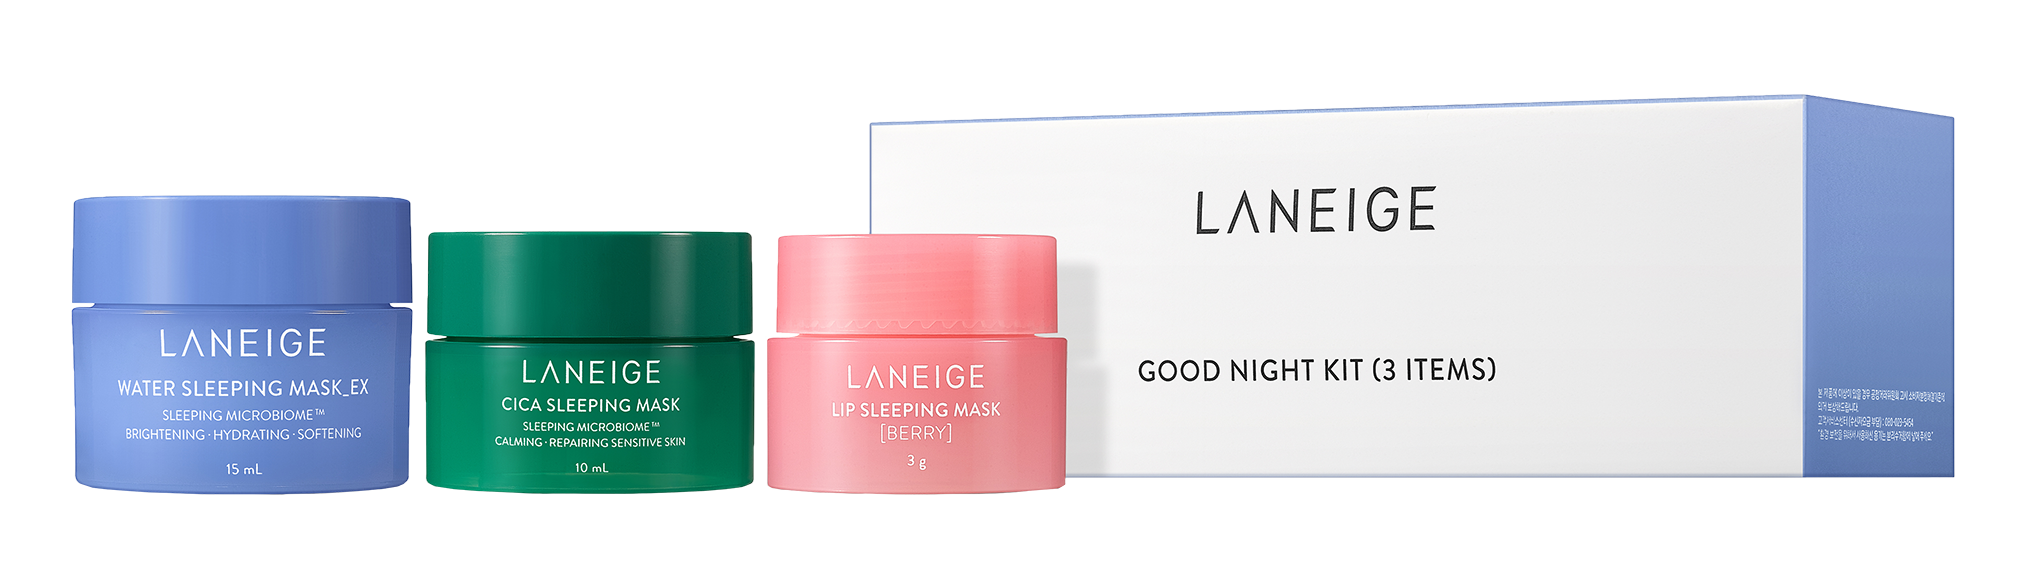 Laneige Goodnight Kit (Only For Live)